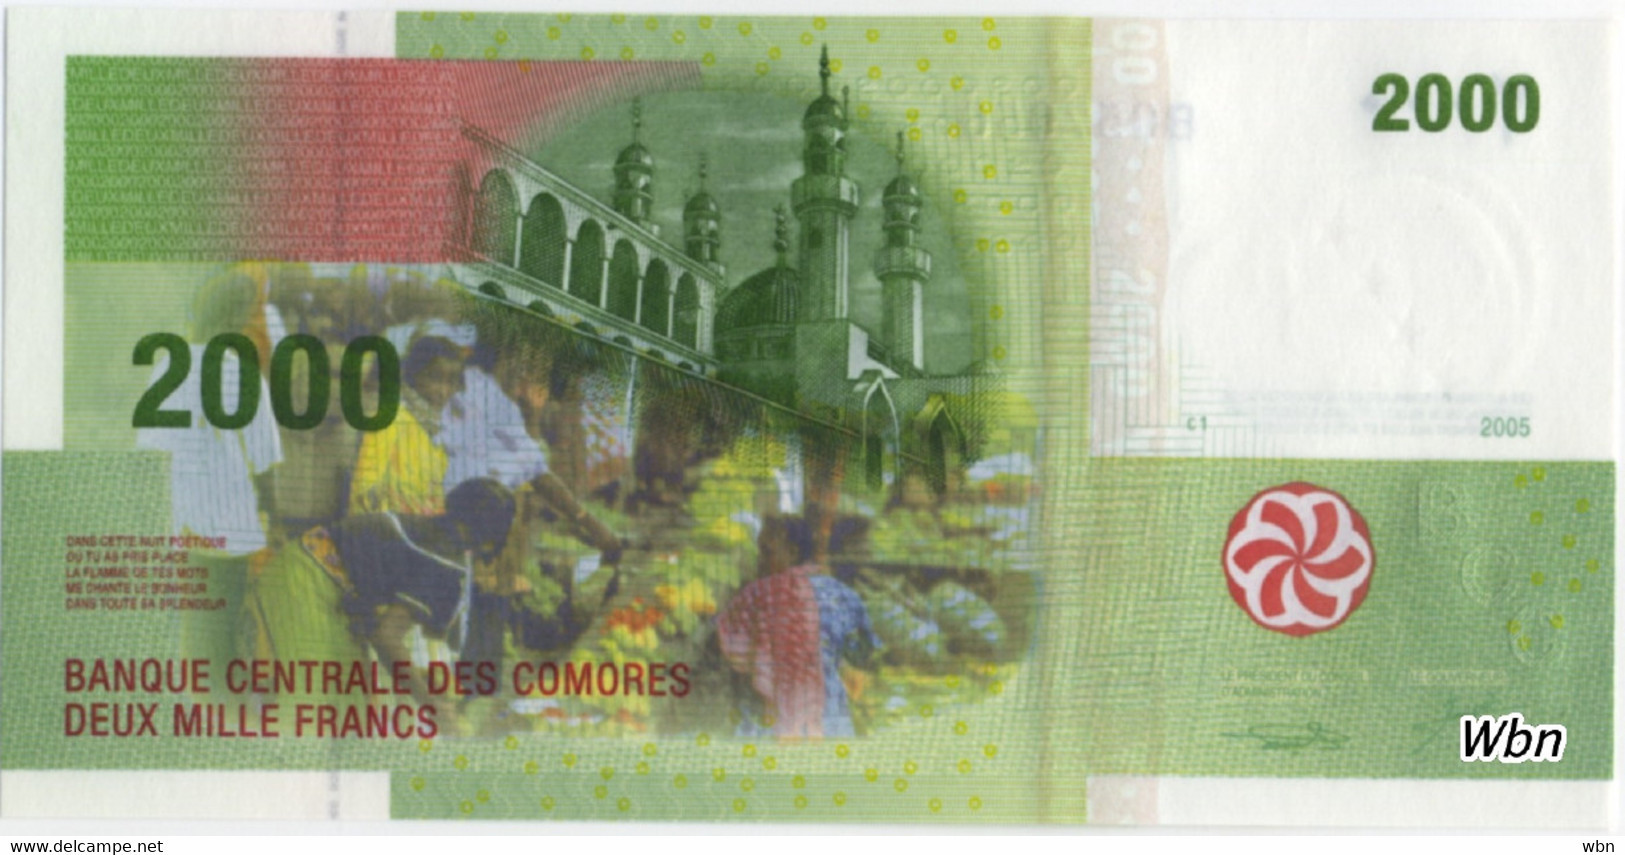 Comores 2000 Francs (P17) 2005 -UNC- - Comores